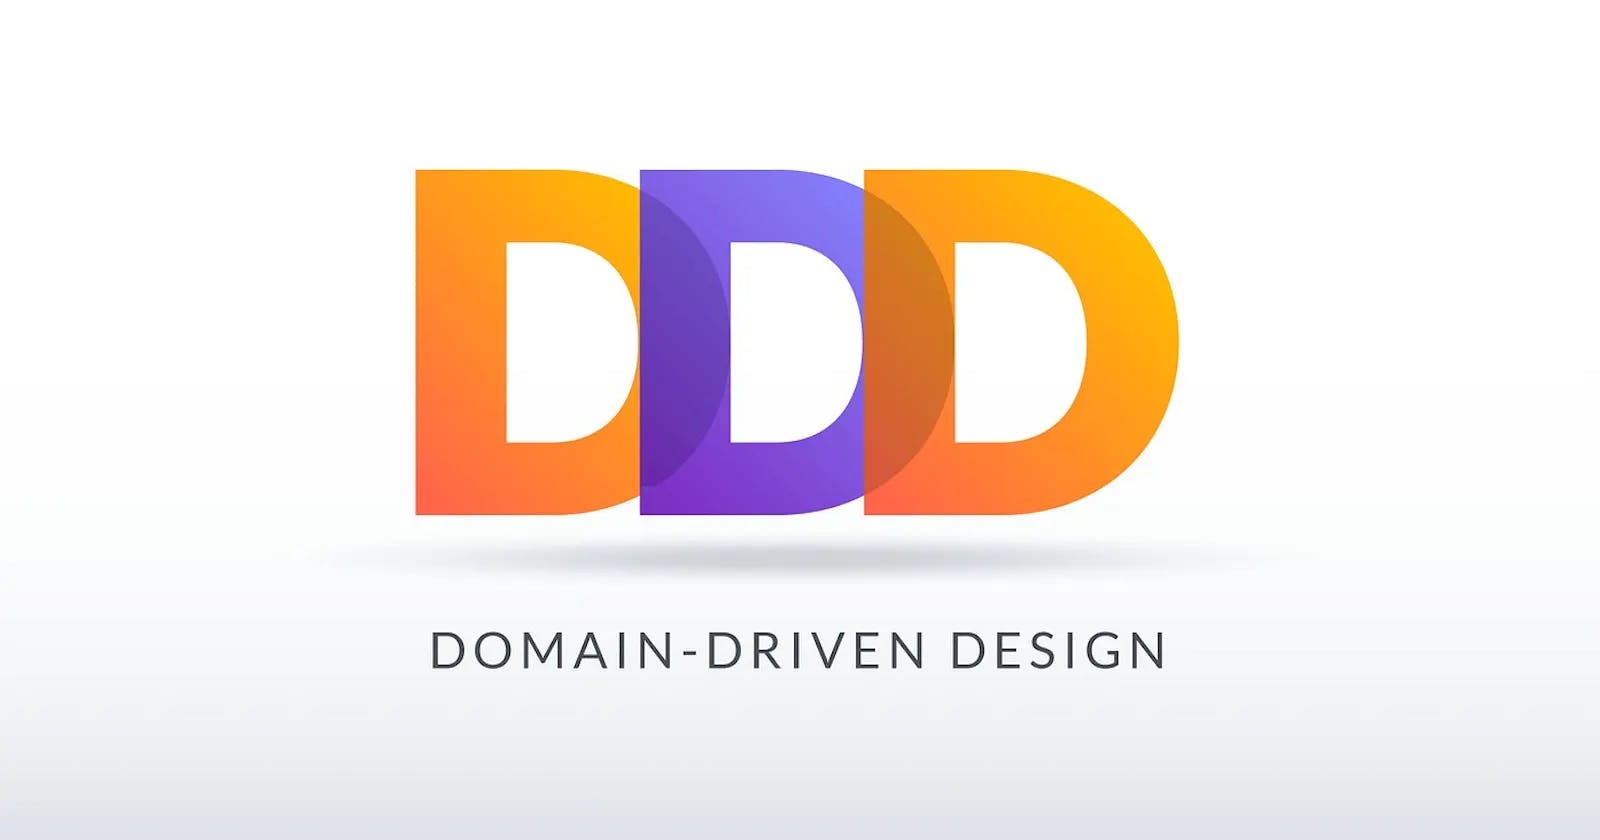 DDD: Repositories